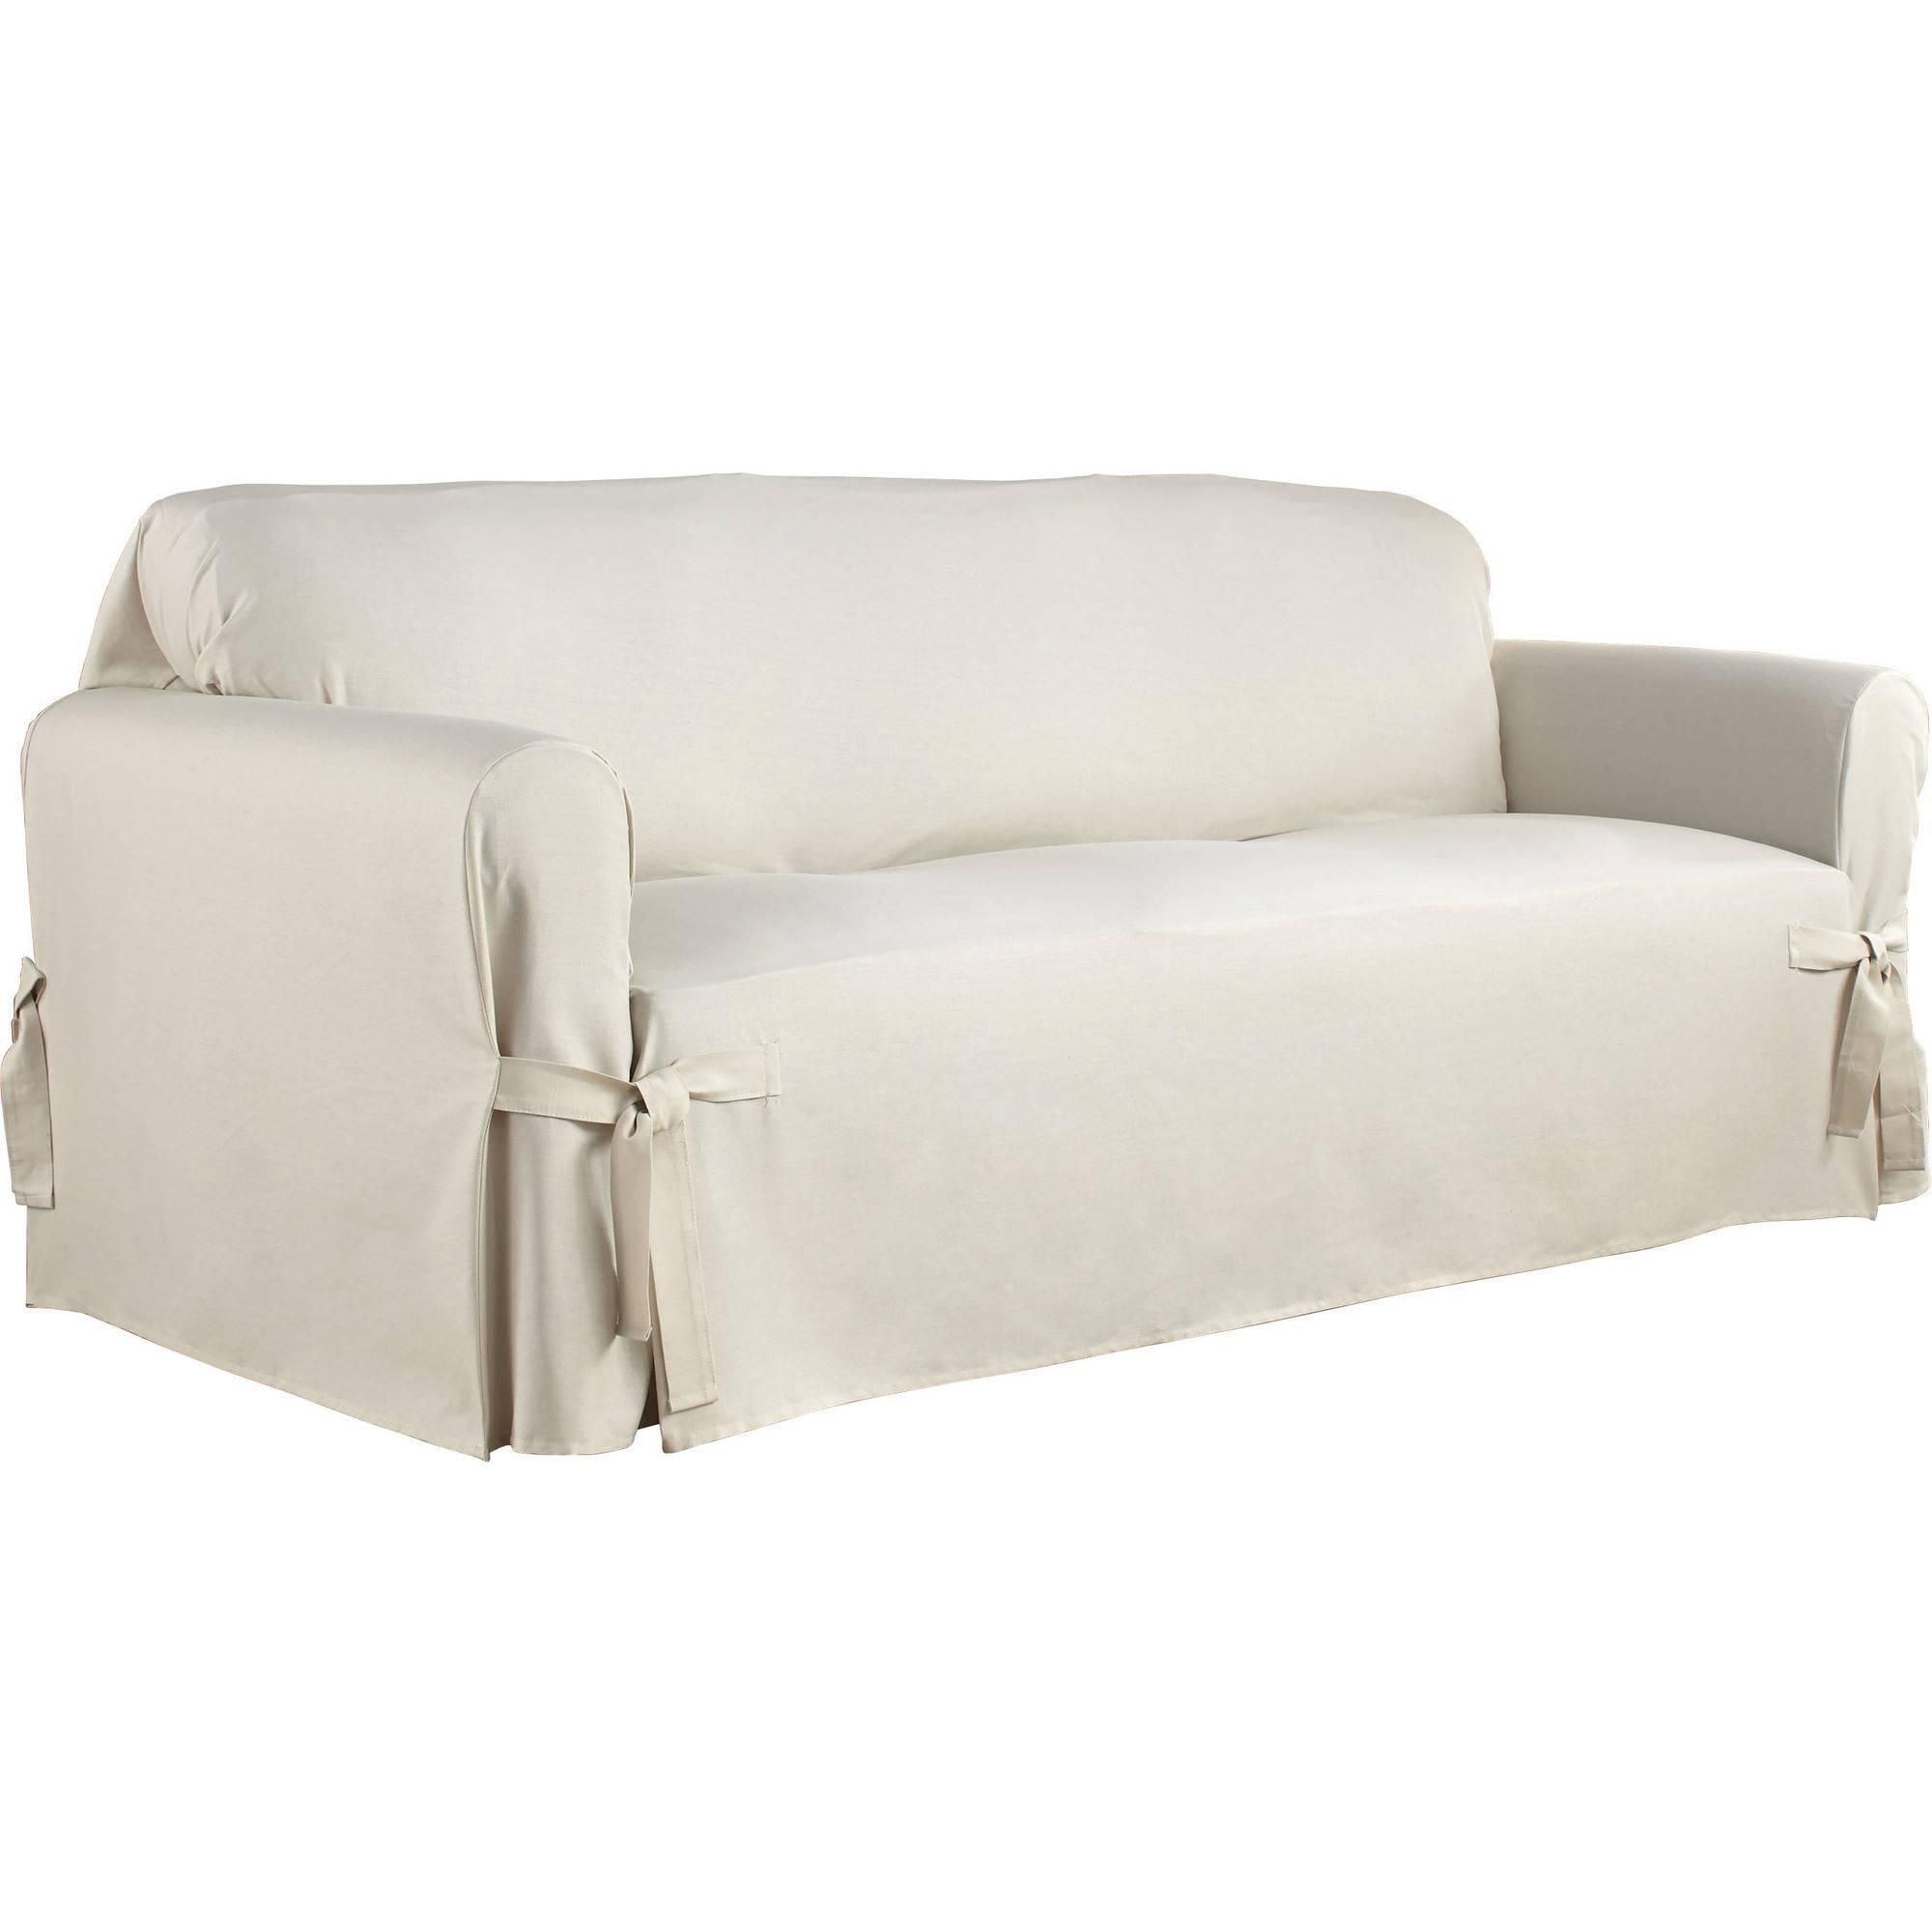 Sofas Center : Cushion Sofa Slipcover 64E8371421Ea 1 Sure Fit For Slipcovers For 3 Cushion Sofas (View 15 of 20)